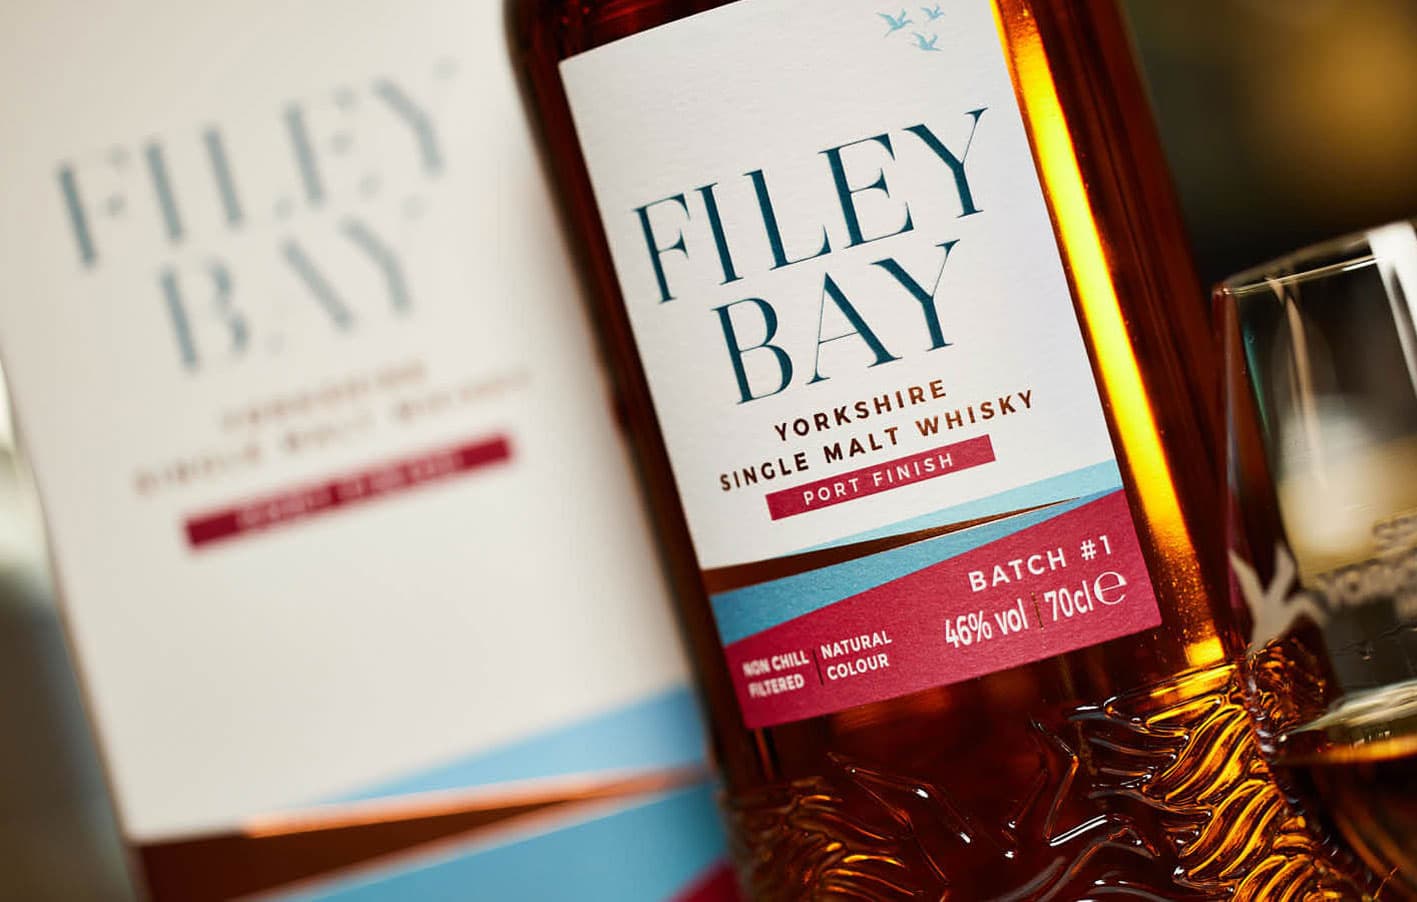 Filey Bay Port Finish Batch #1 - Bottle, Glass, Carton